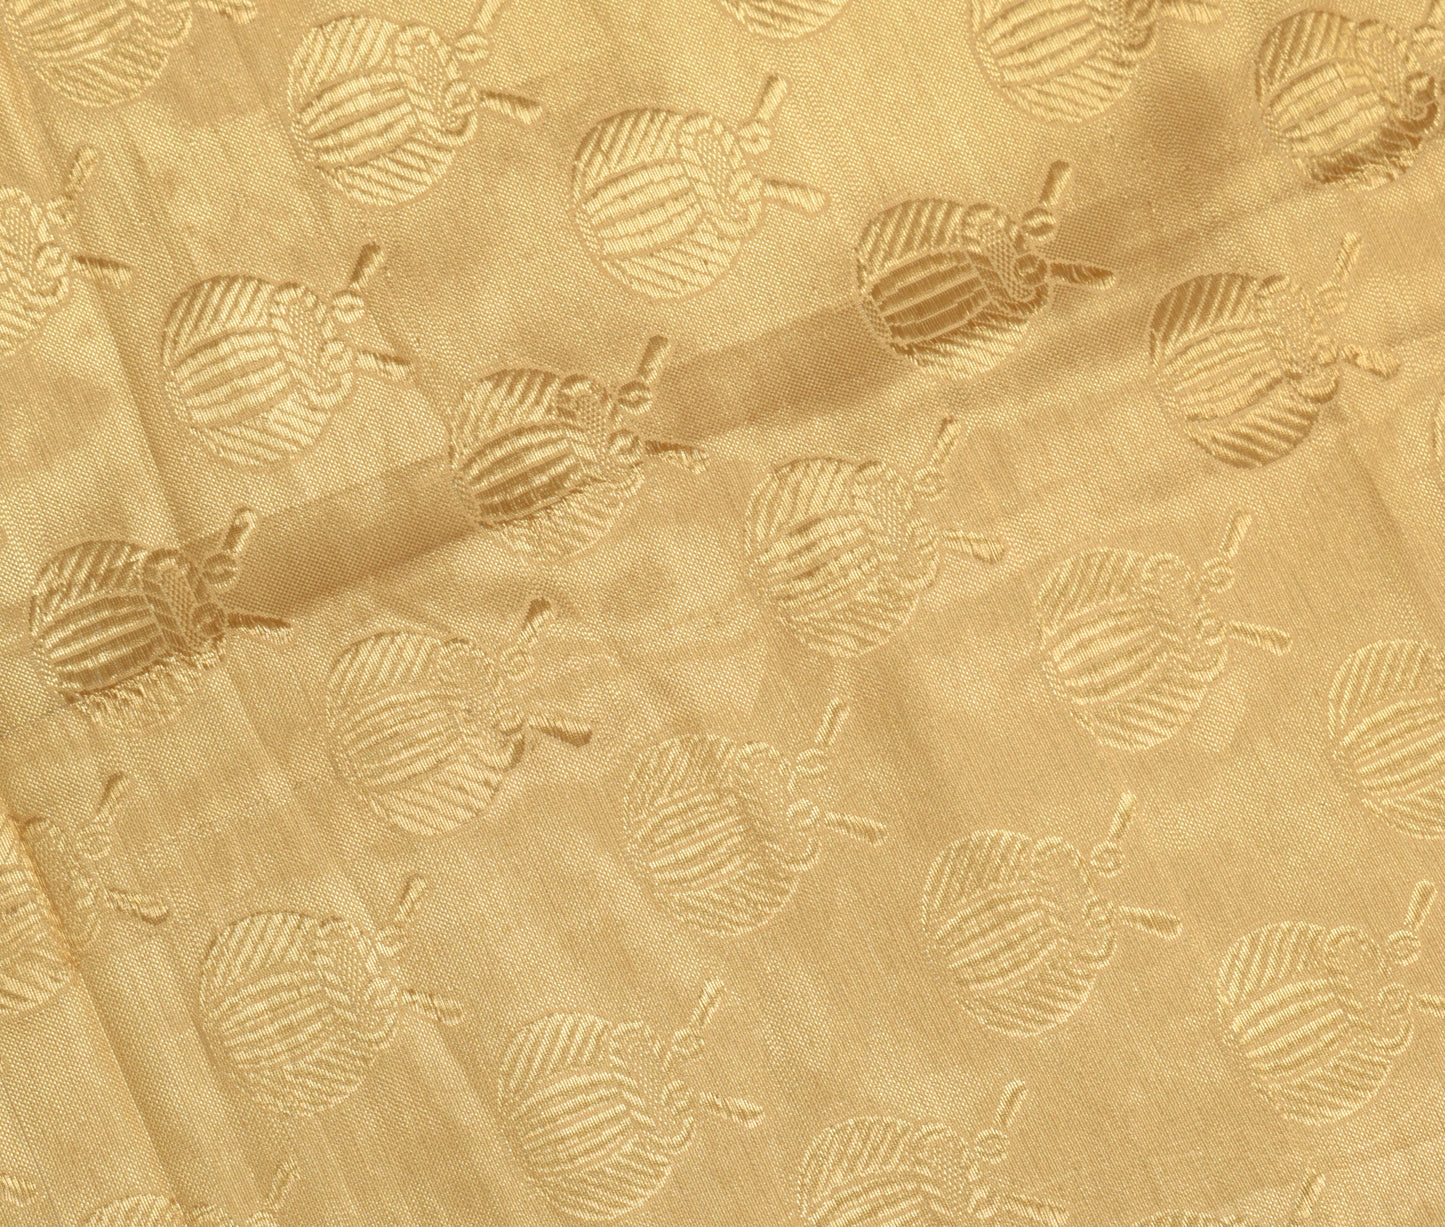 Sushila Vintage Golden Silk Sari Remnant Scrap Multi Purpose Woven Craft Fabric